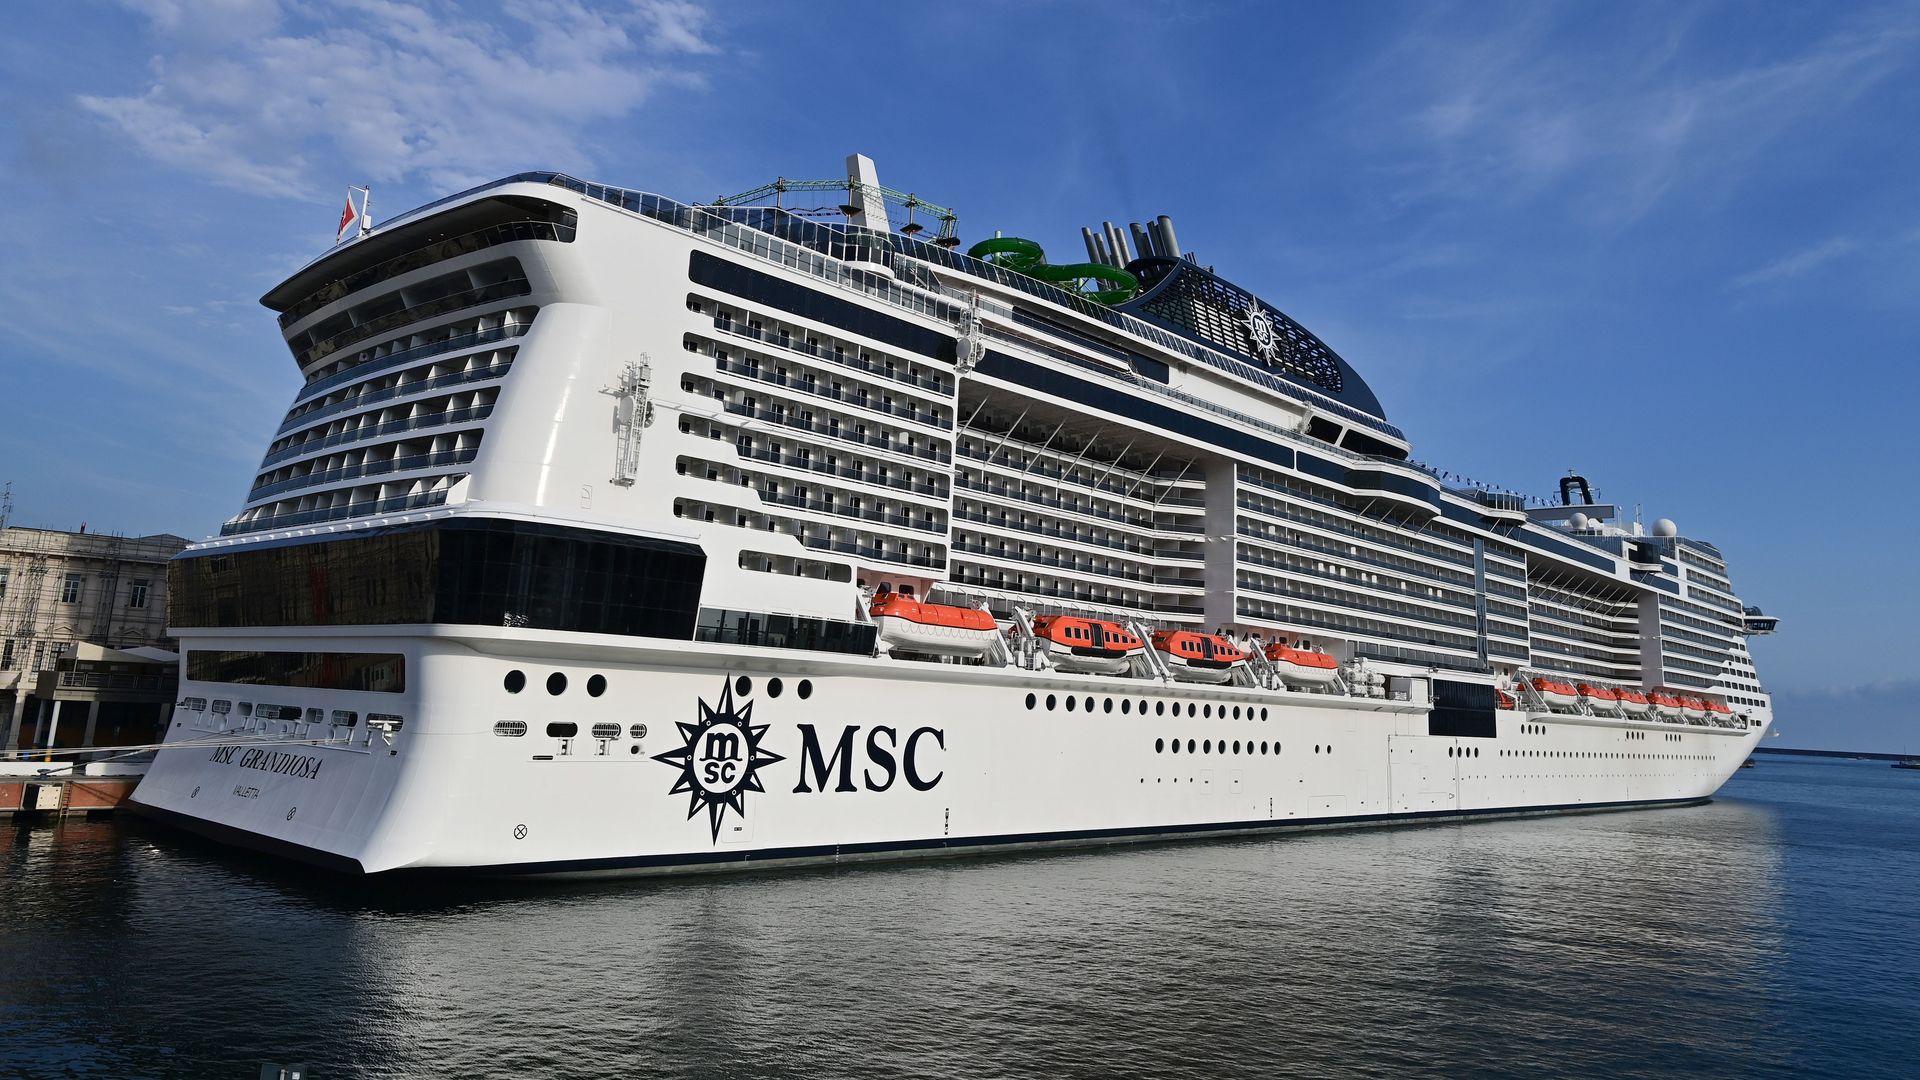 The MSC Grandiosa cruise liner leaving port in Genoa, Italy